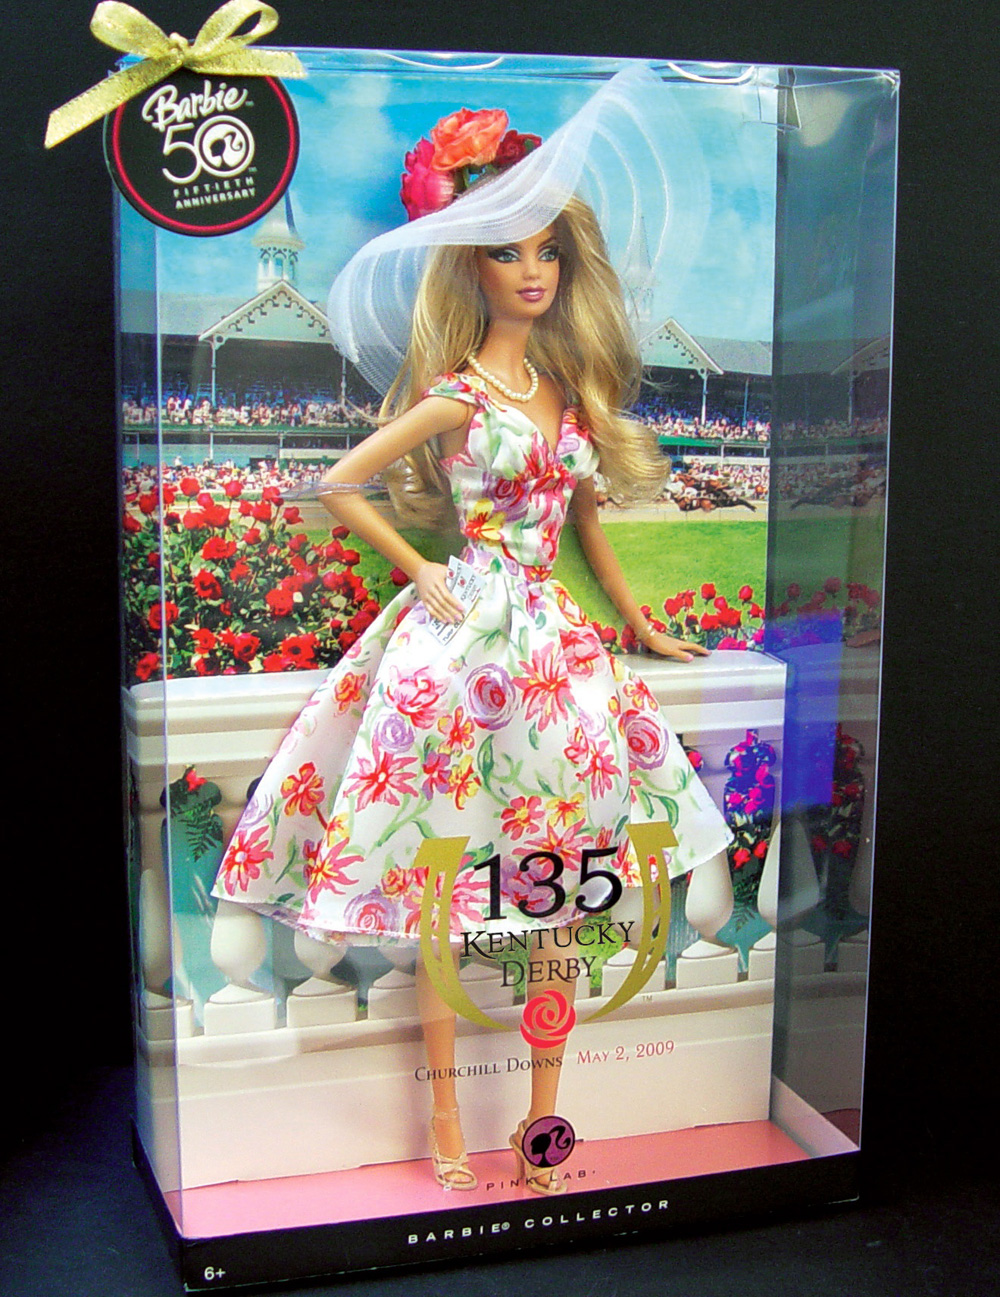 Barbie Attends the Kentucky Derby